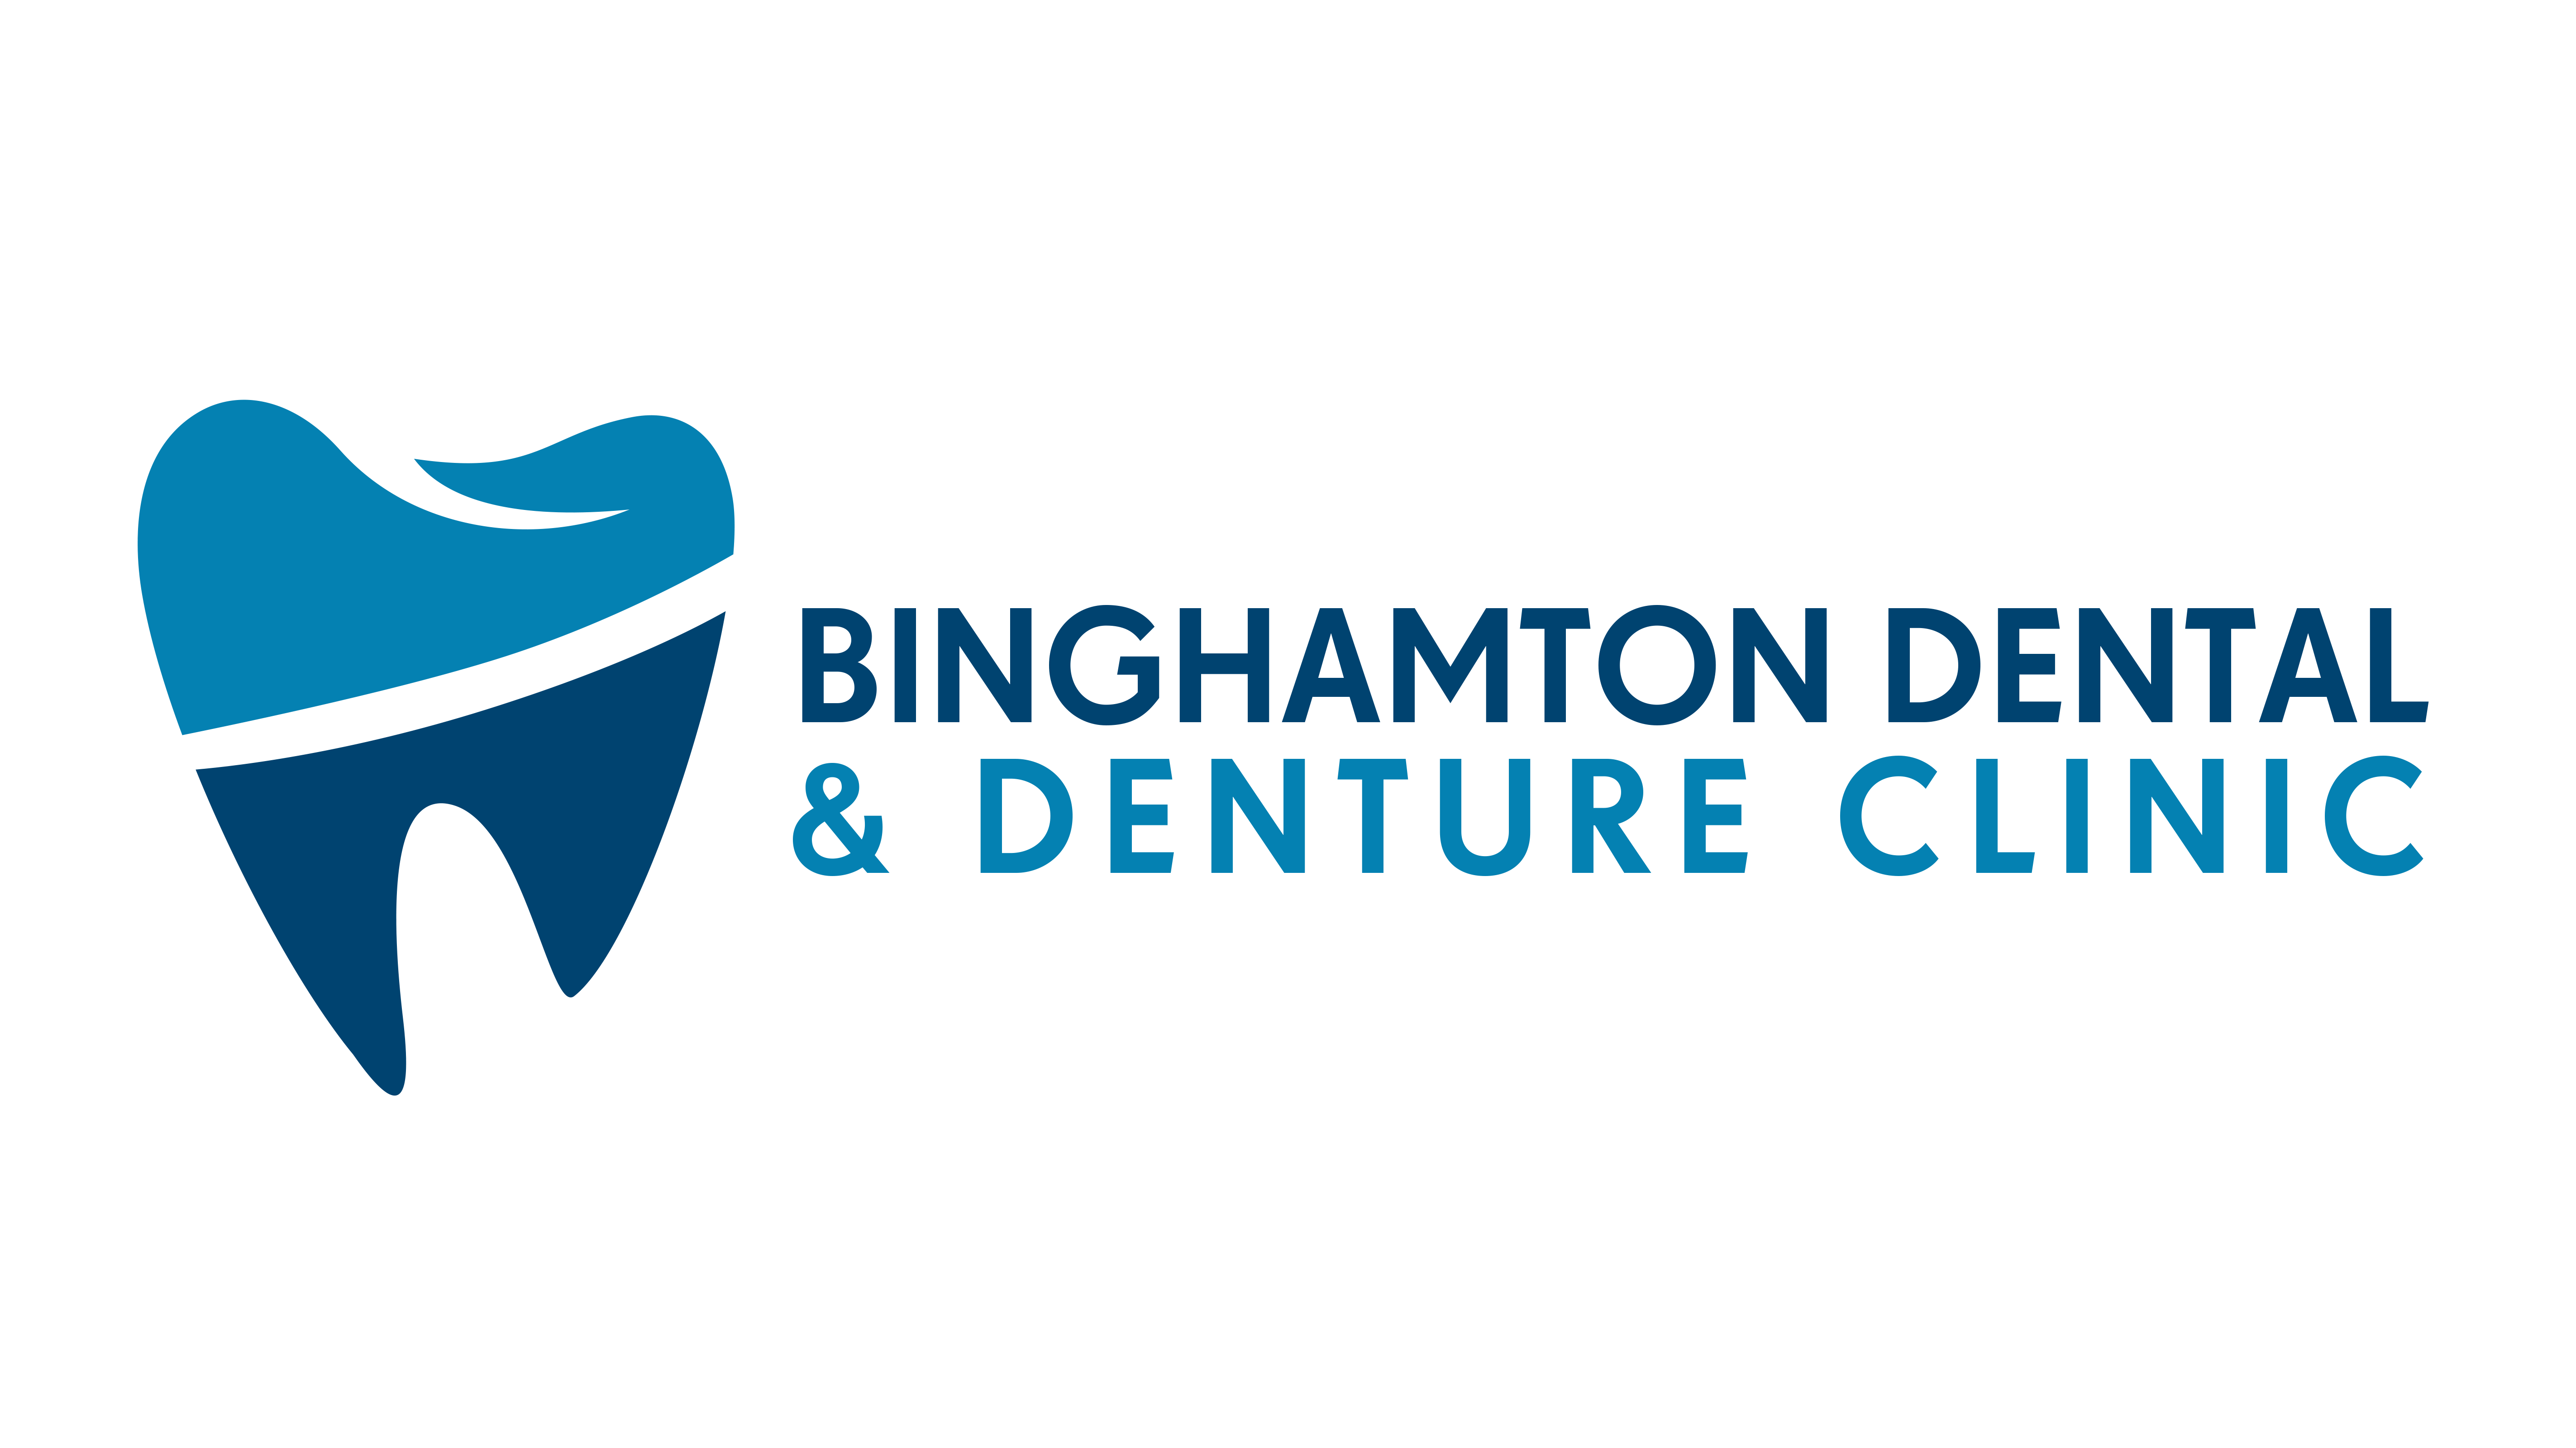 Binghamton Dental & Denture Clinic